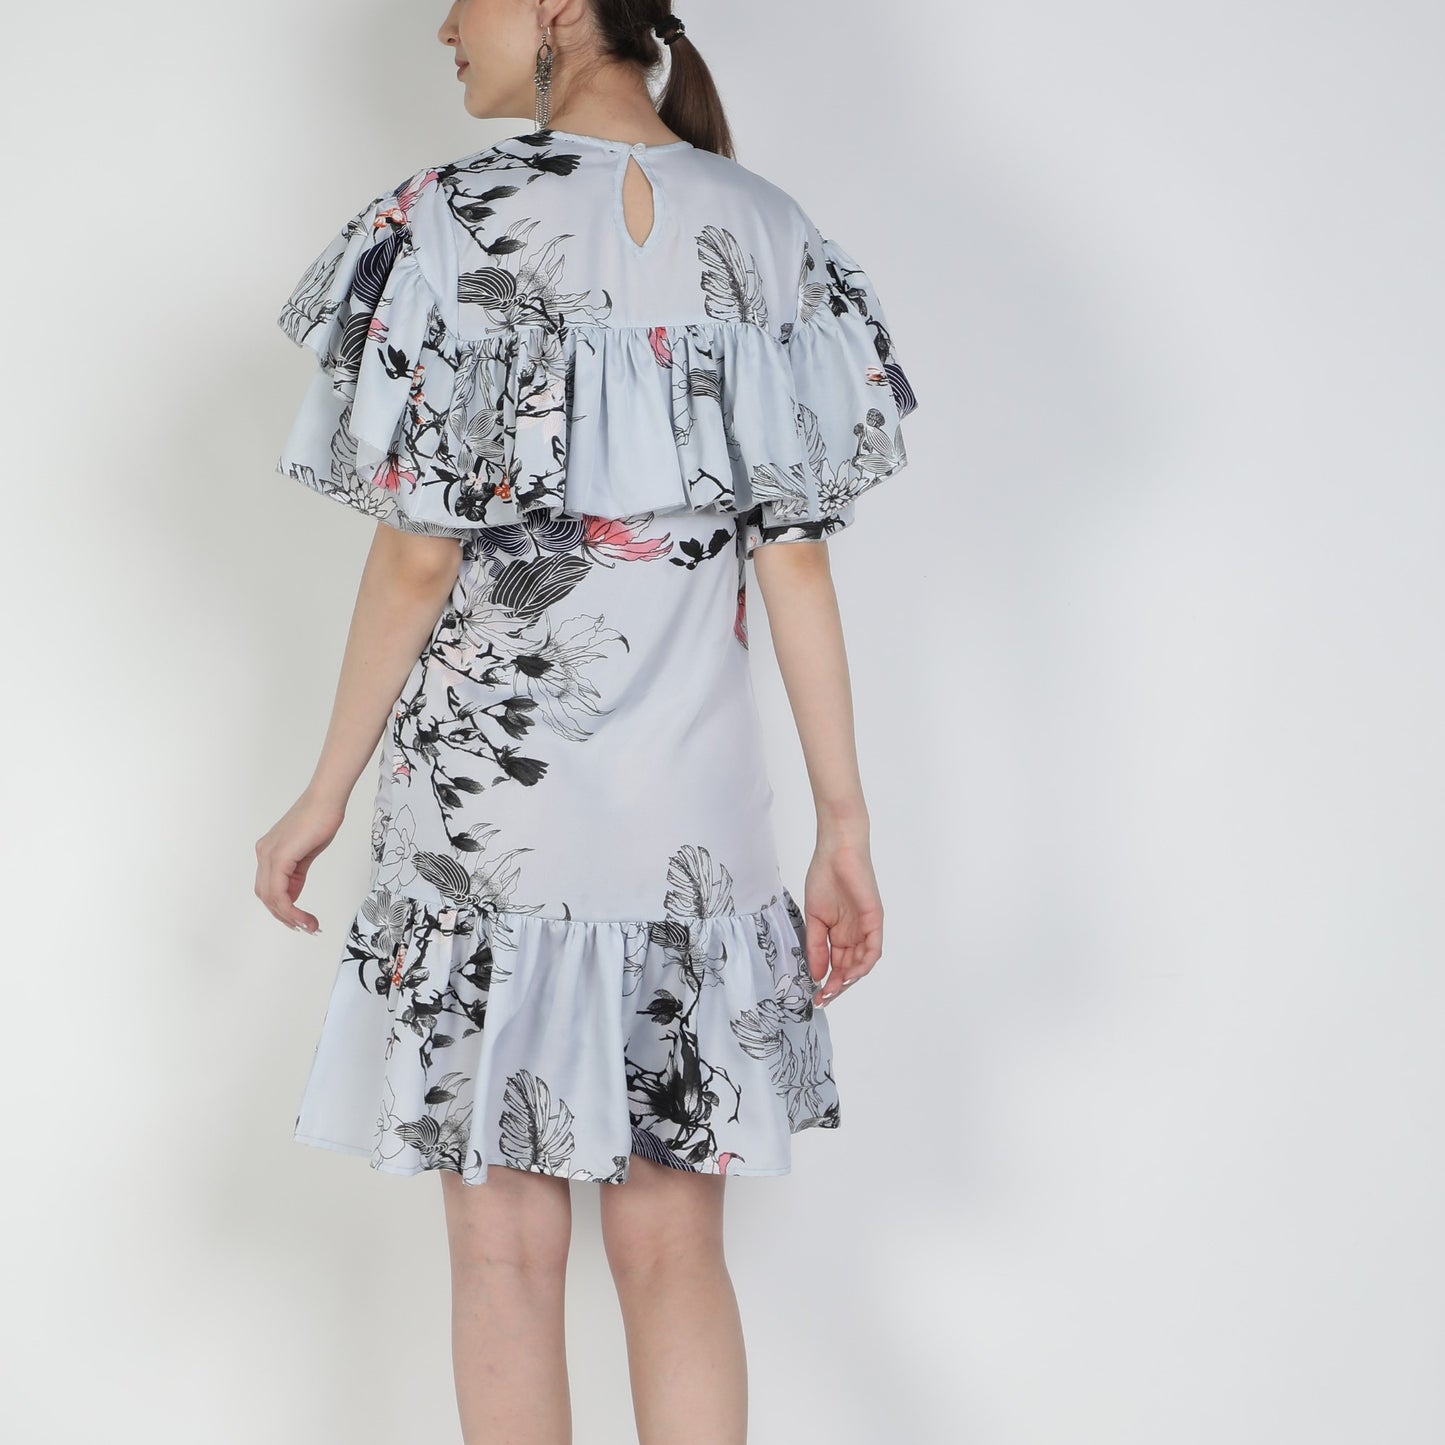 Natalia Gray Printed Dress